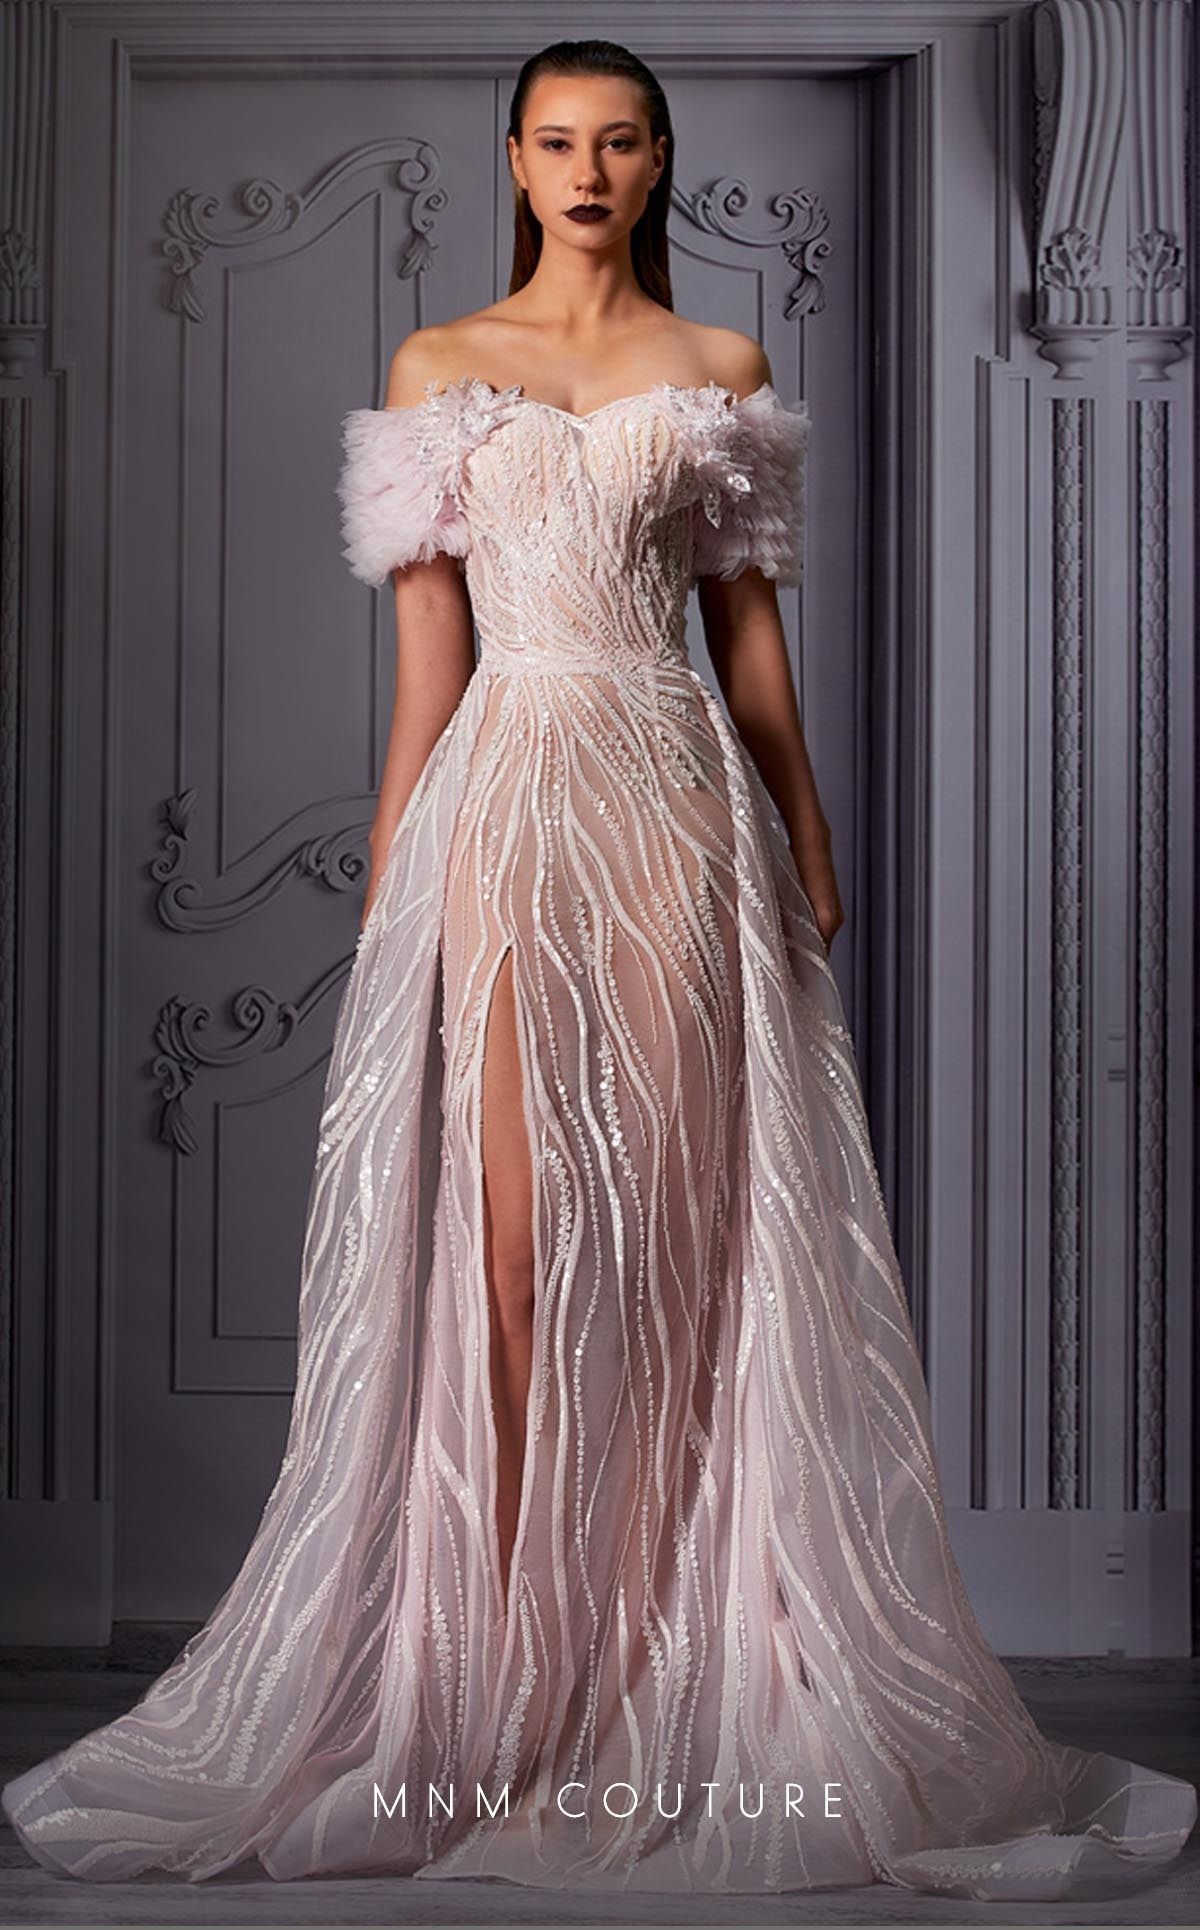 K3858 - K3858 -   19 beauty Dresses 2019 ideas